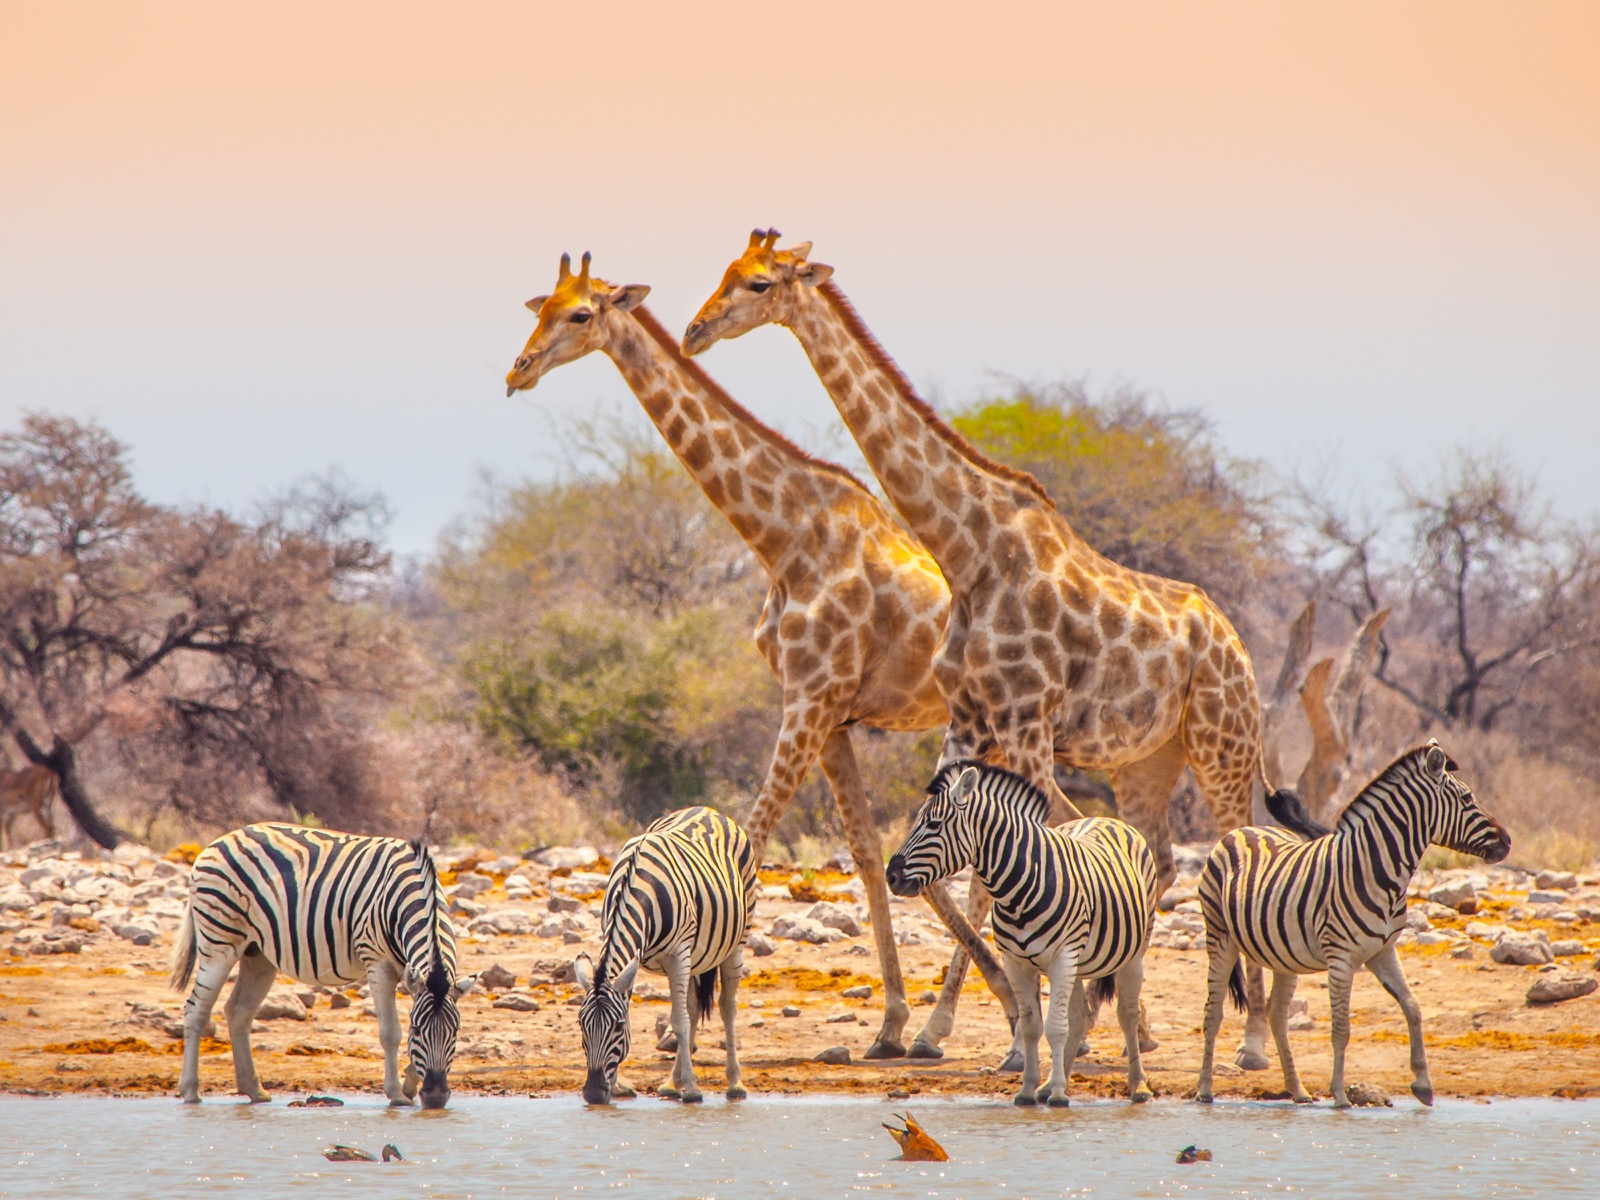 Biodiversity, habitat, giraffes and four zebras at waterhole in Etosha National Park, Namibia